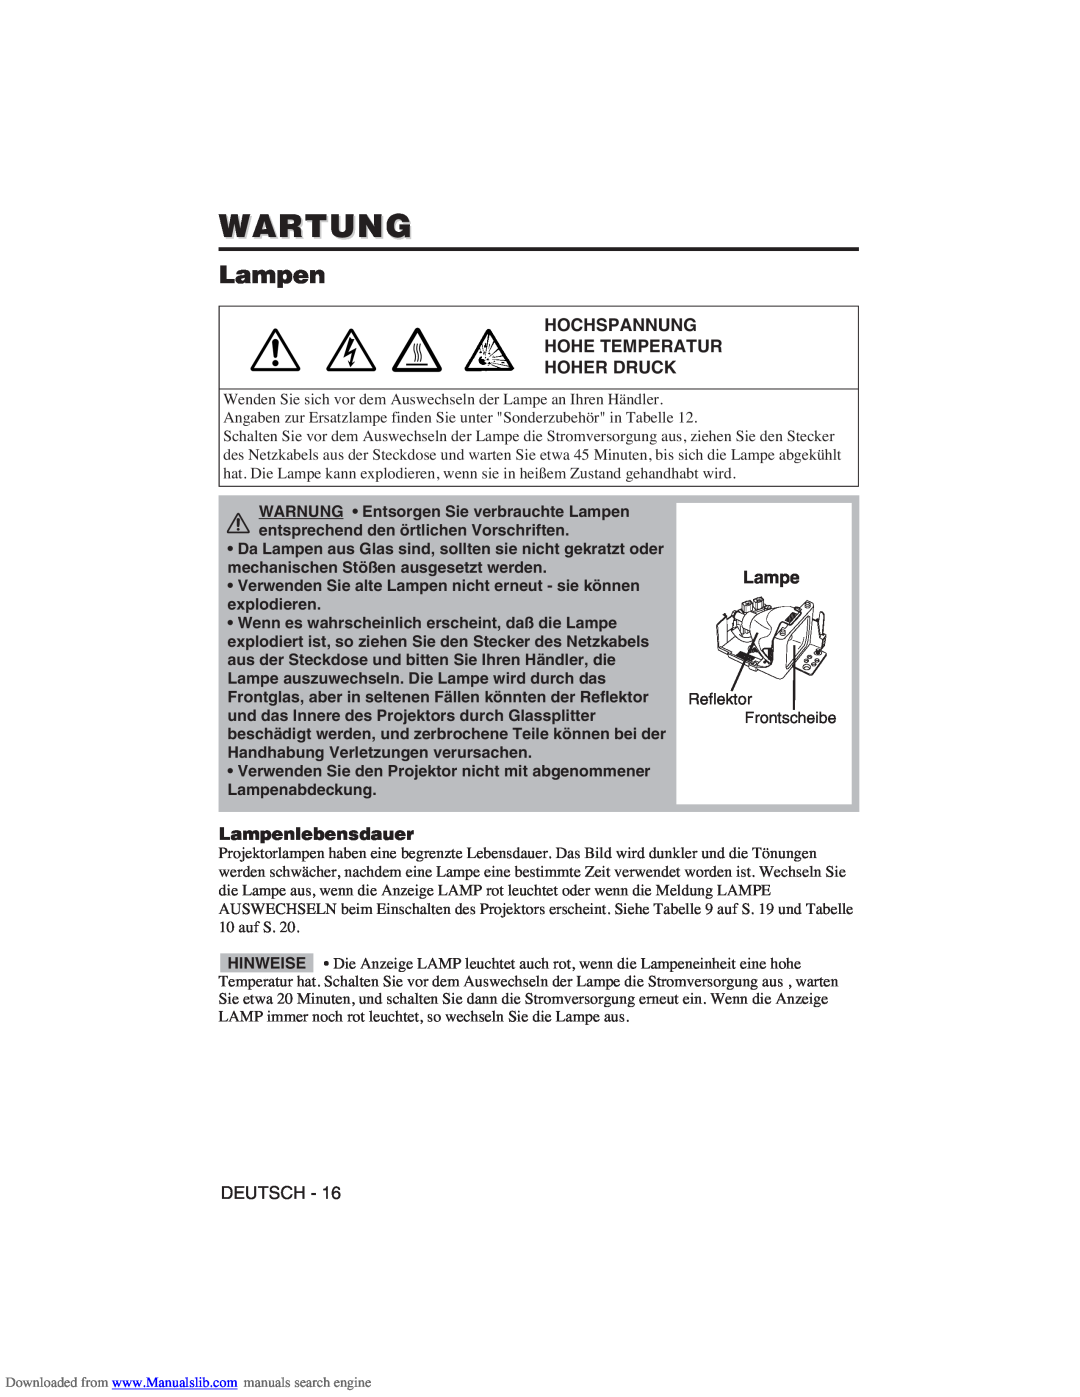 Hitachi CP-X275W user manual Wartung, Hochspannung Hohe Temperatur Hoher Druck, Lampenlebensdauer 